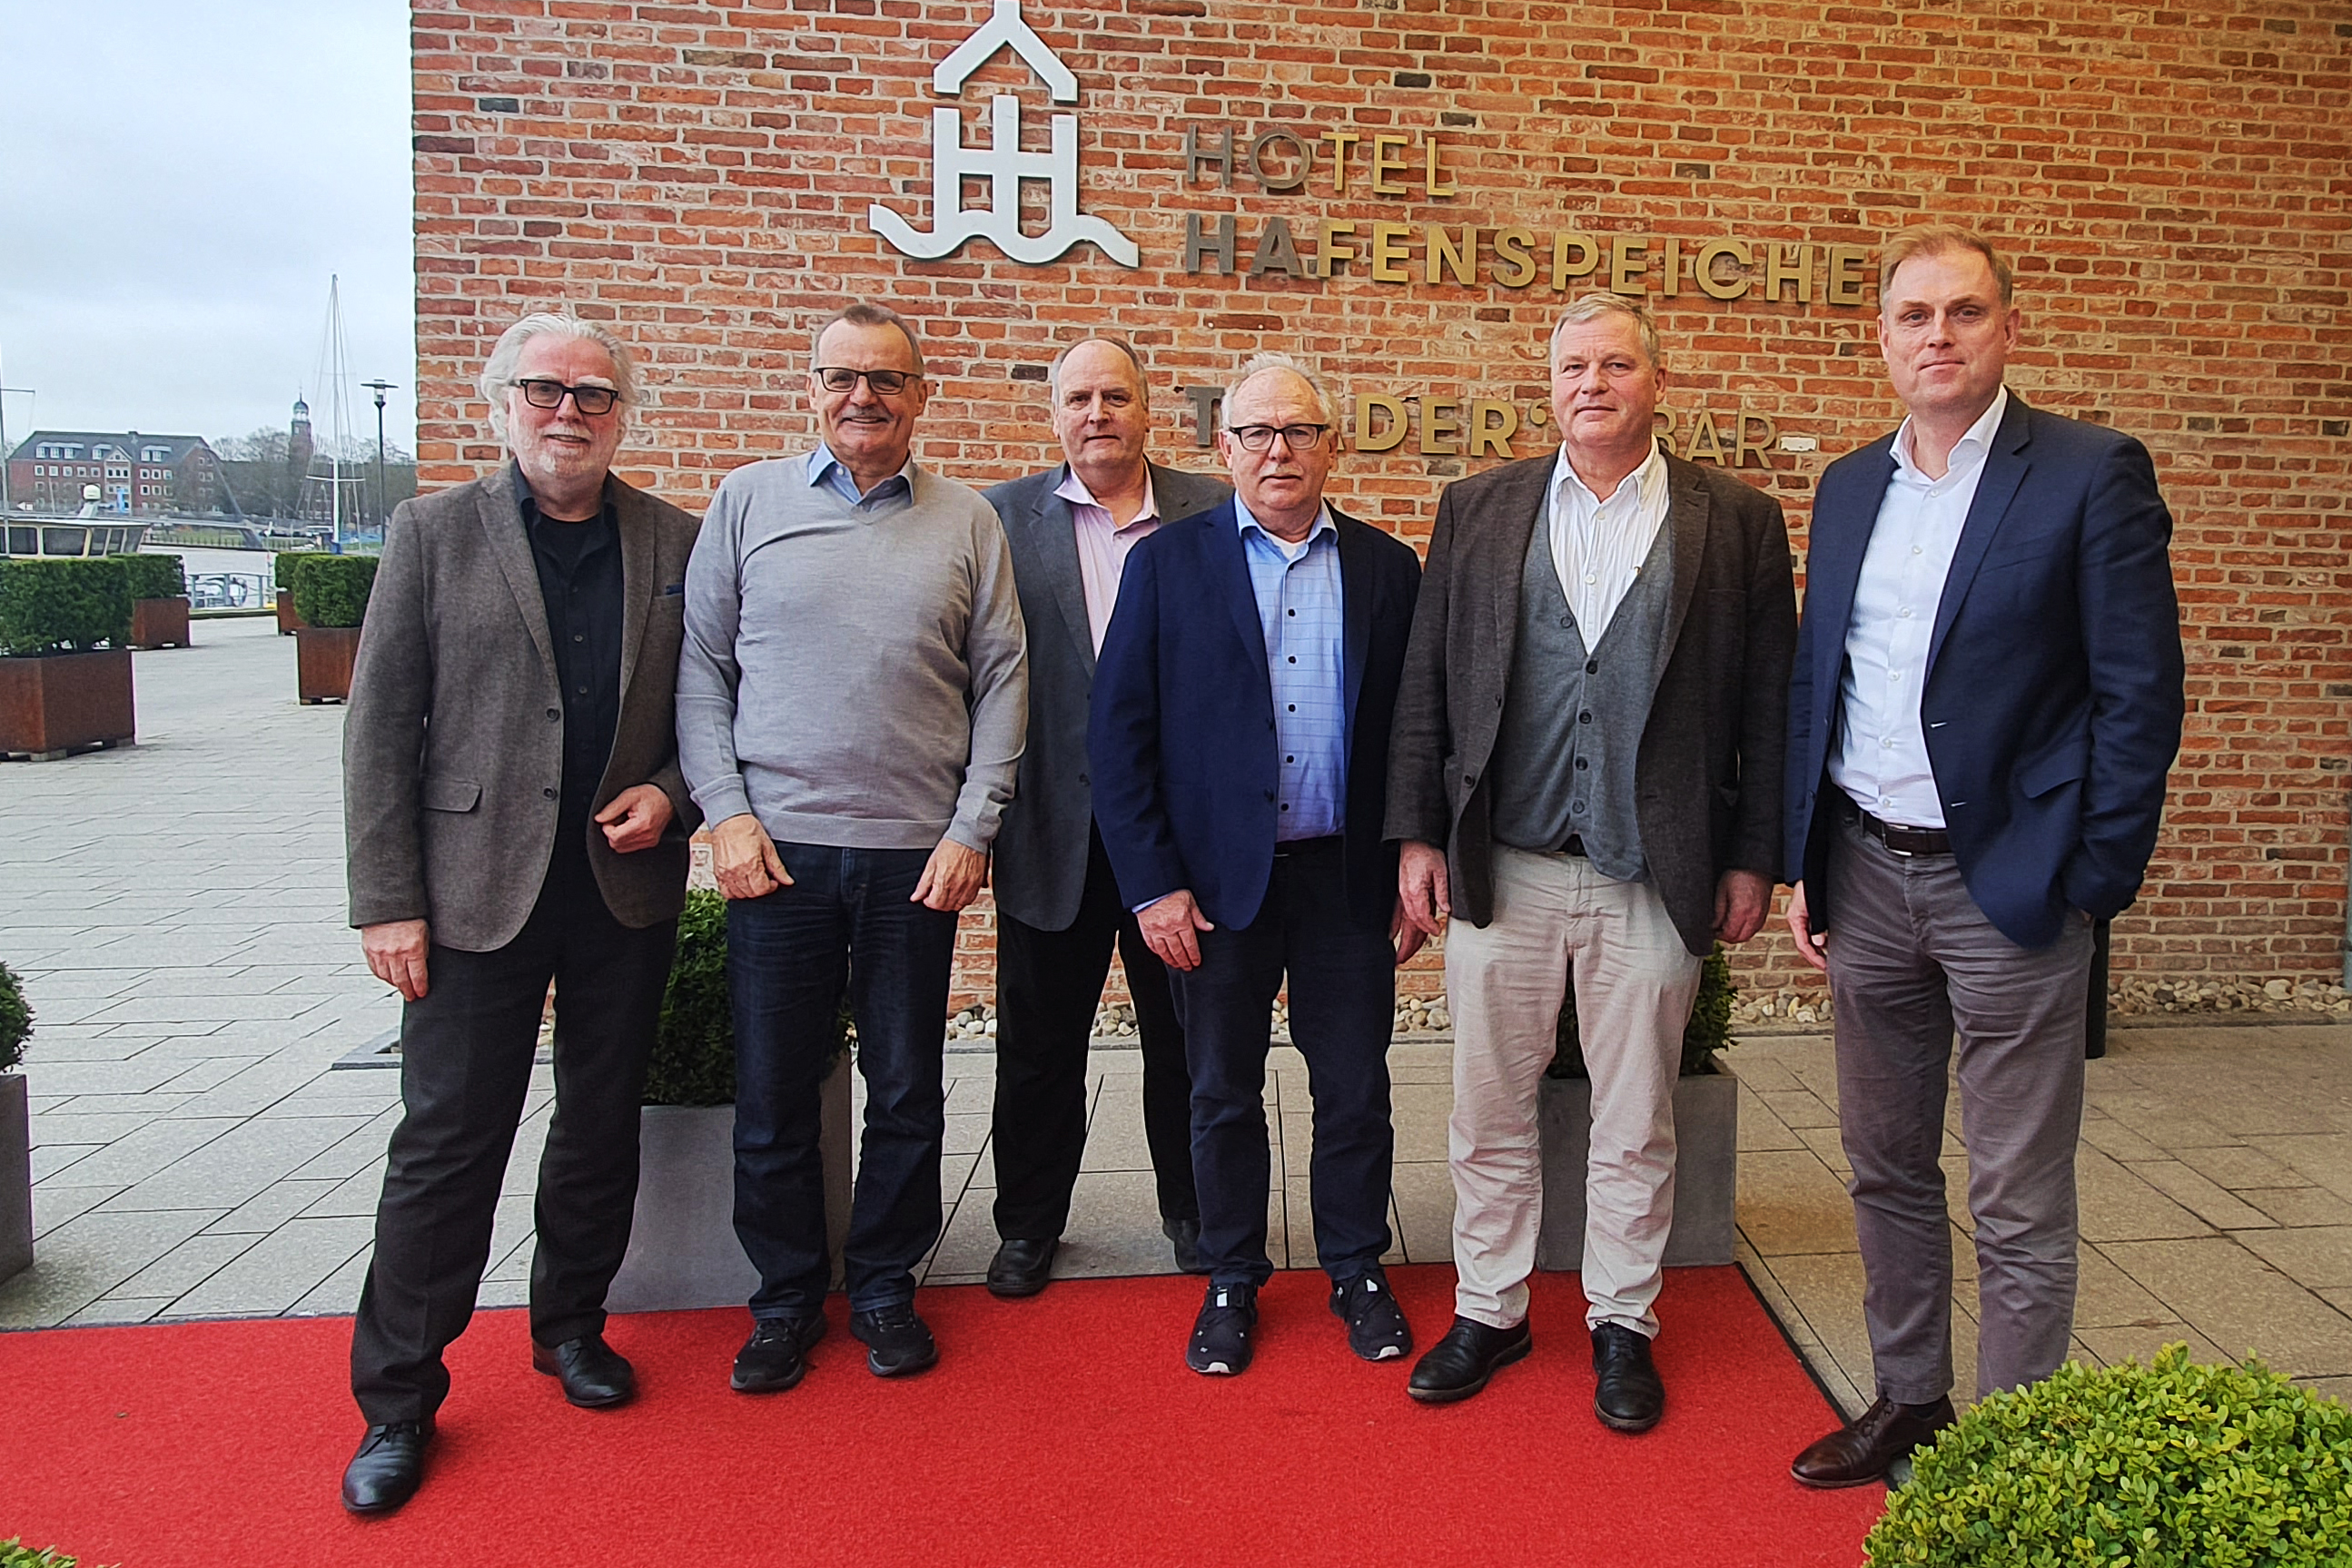 v. l.: Wilfried Grunau, Rudolf Staiger, Burkhard Kreuter, Michael Zurhorst, Clemens Kiepke, Christian Hesse.